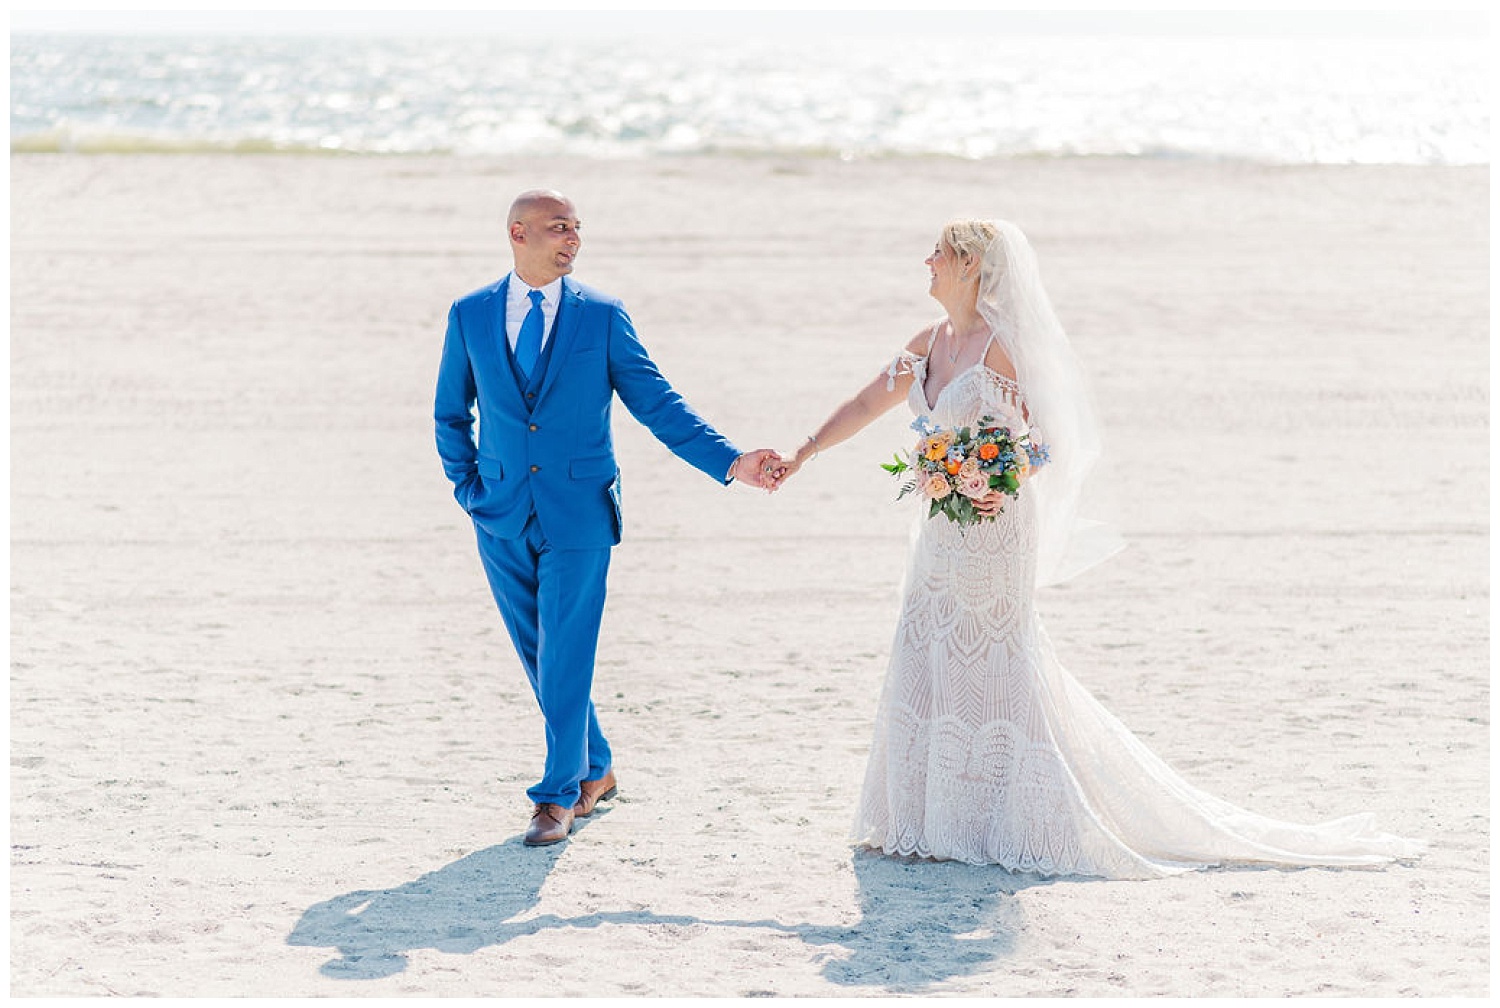 Wilmington North Carolina photographer shooting a wedding couple